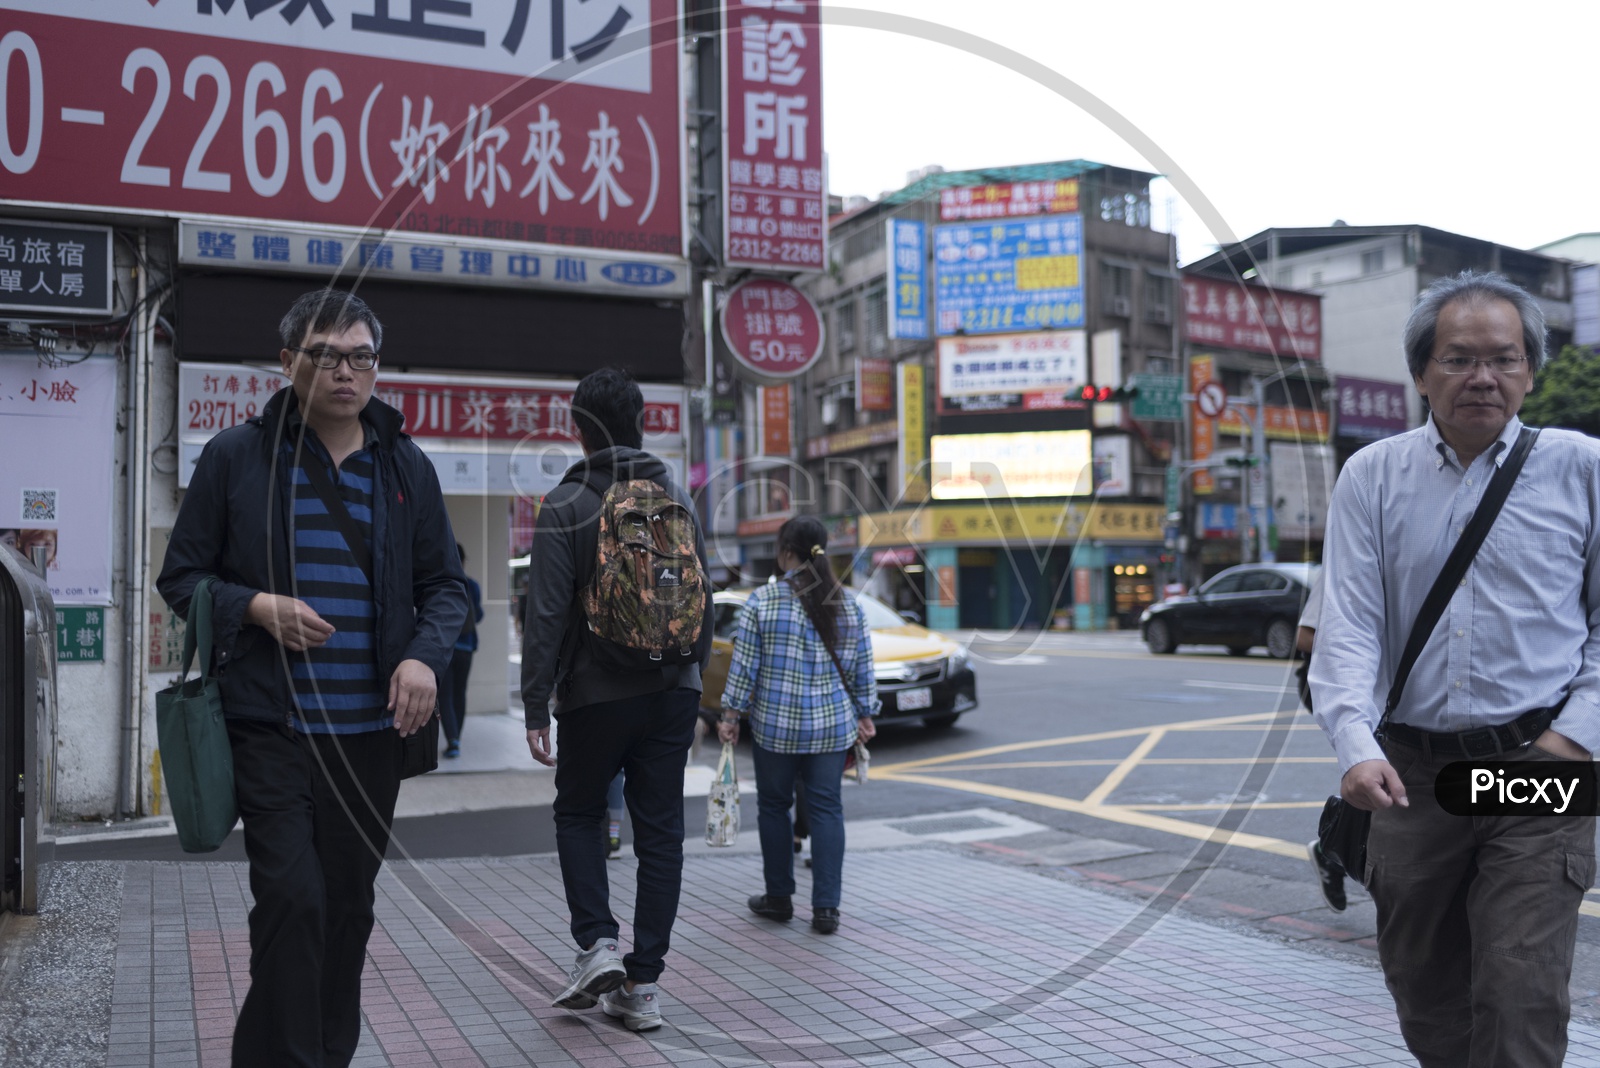 Pedestrians on The Roads of Taipei